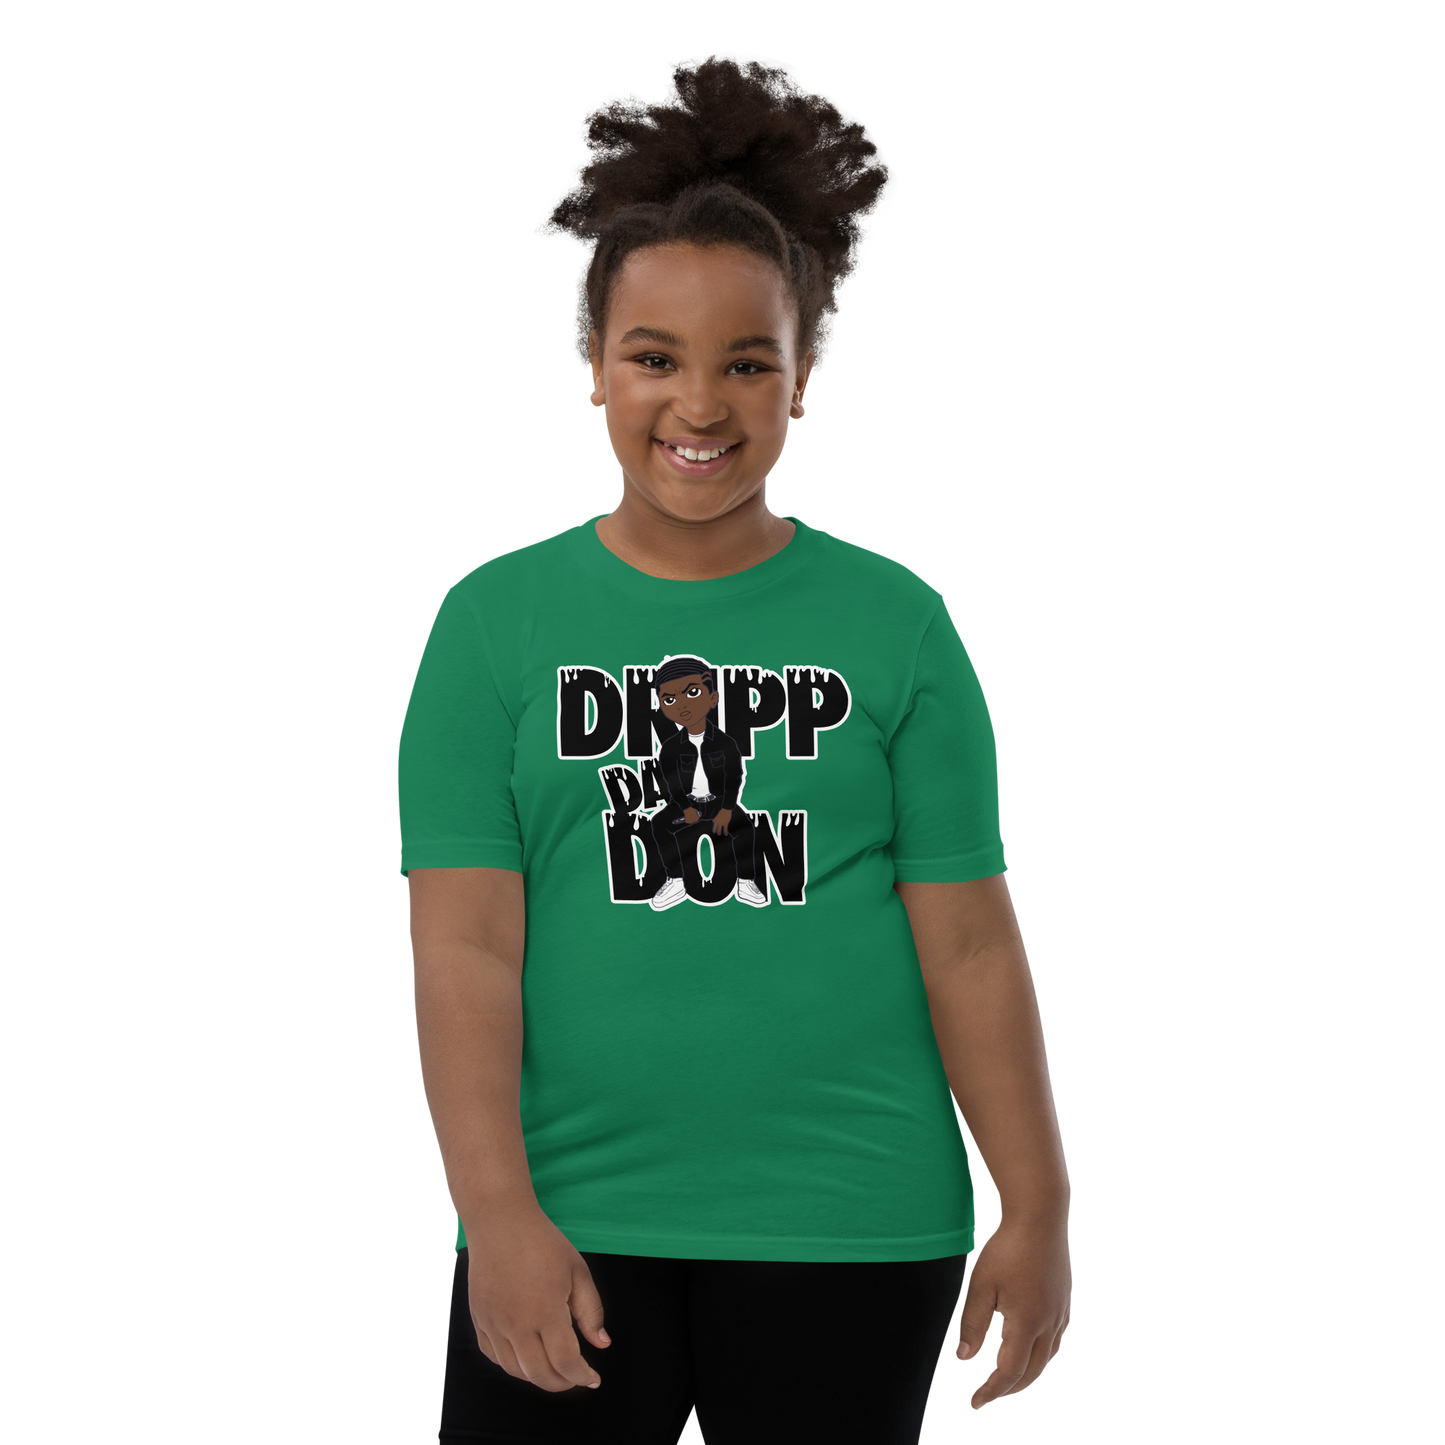 Dripp's Classic Youth T-Shirt